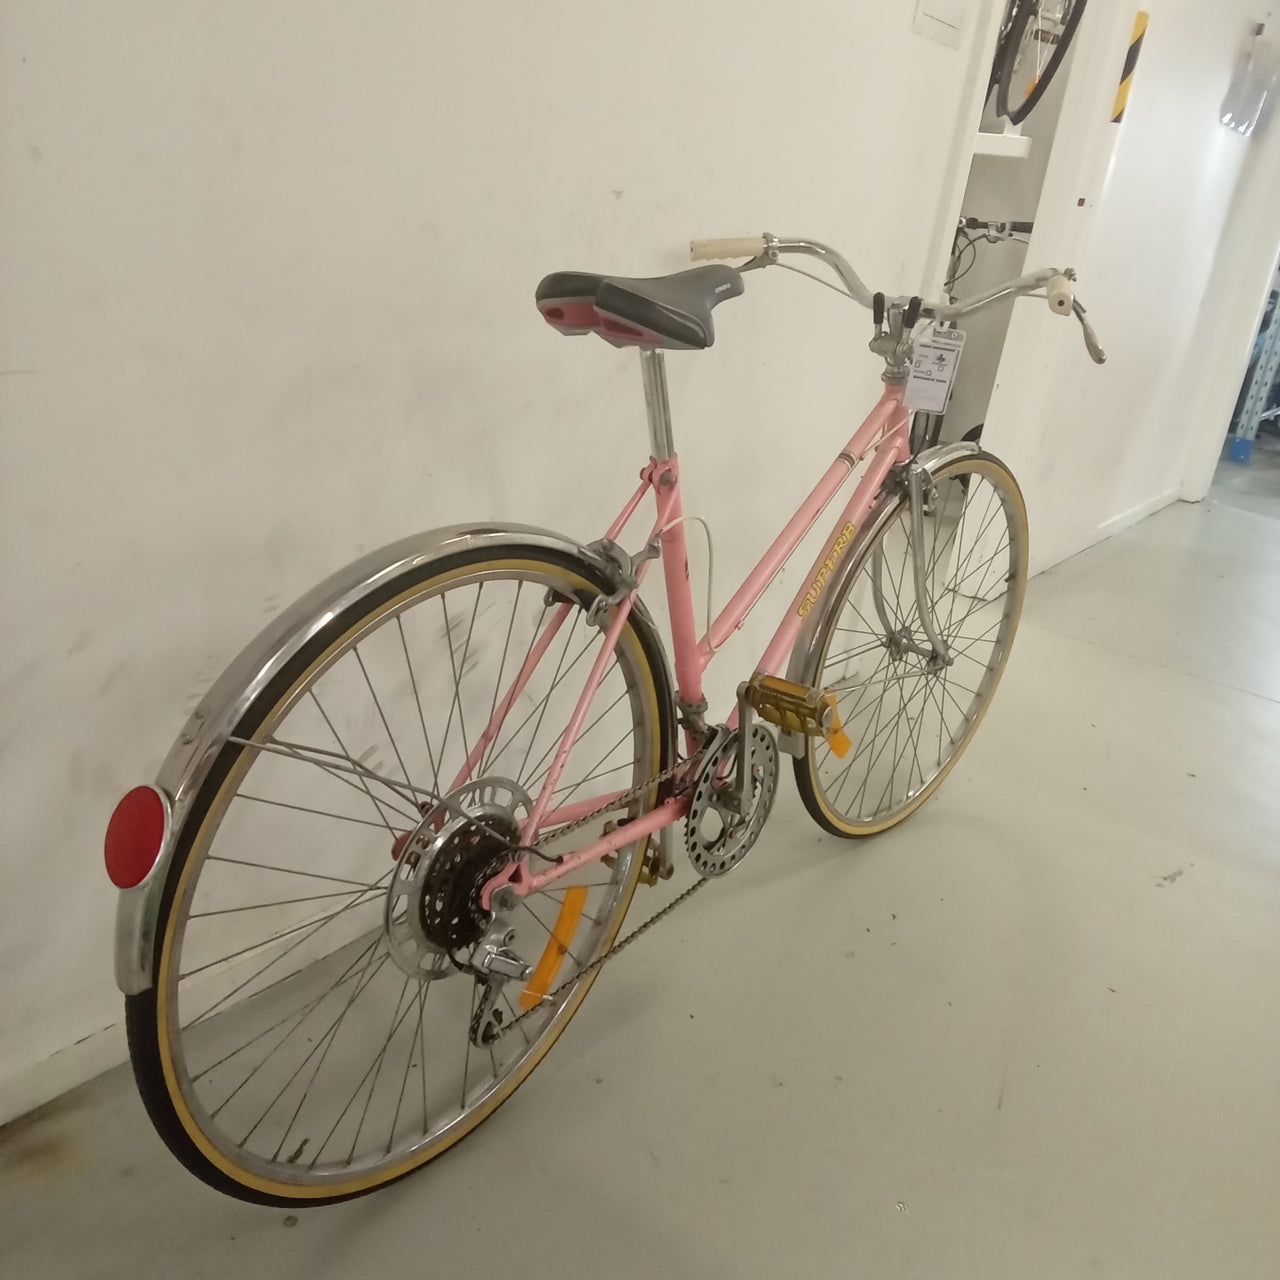 1510 - 48cm Pink, Classic,
Vintage, Bike